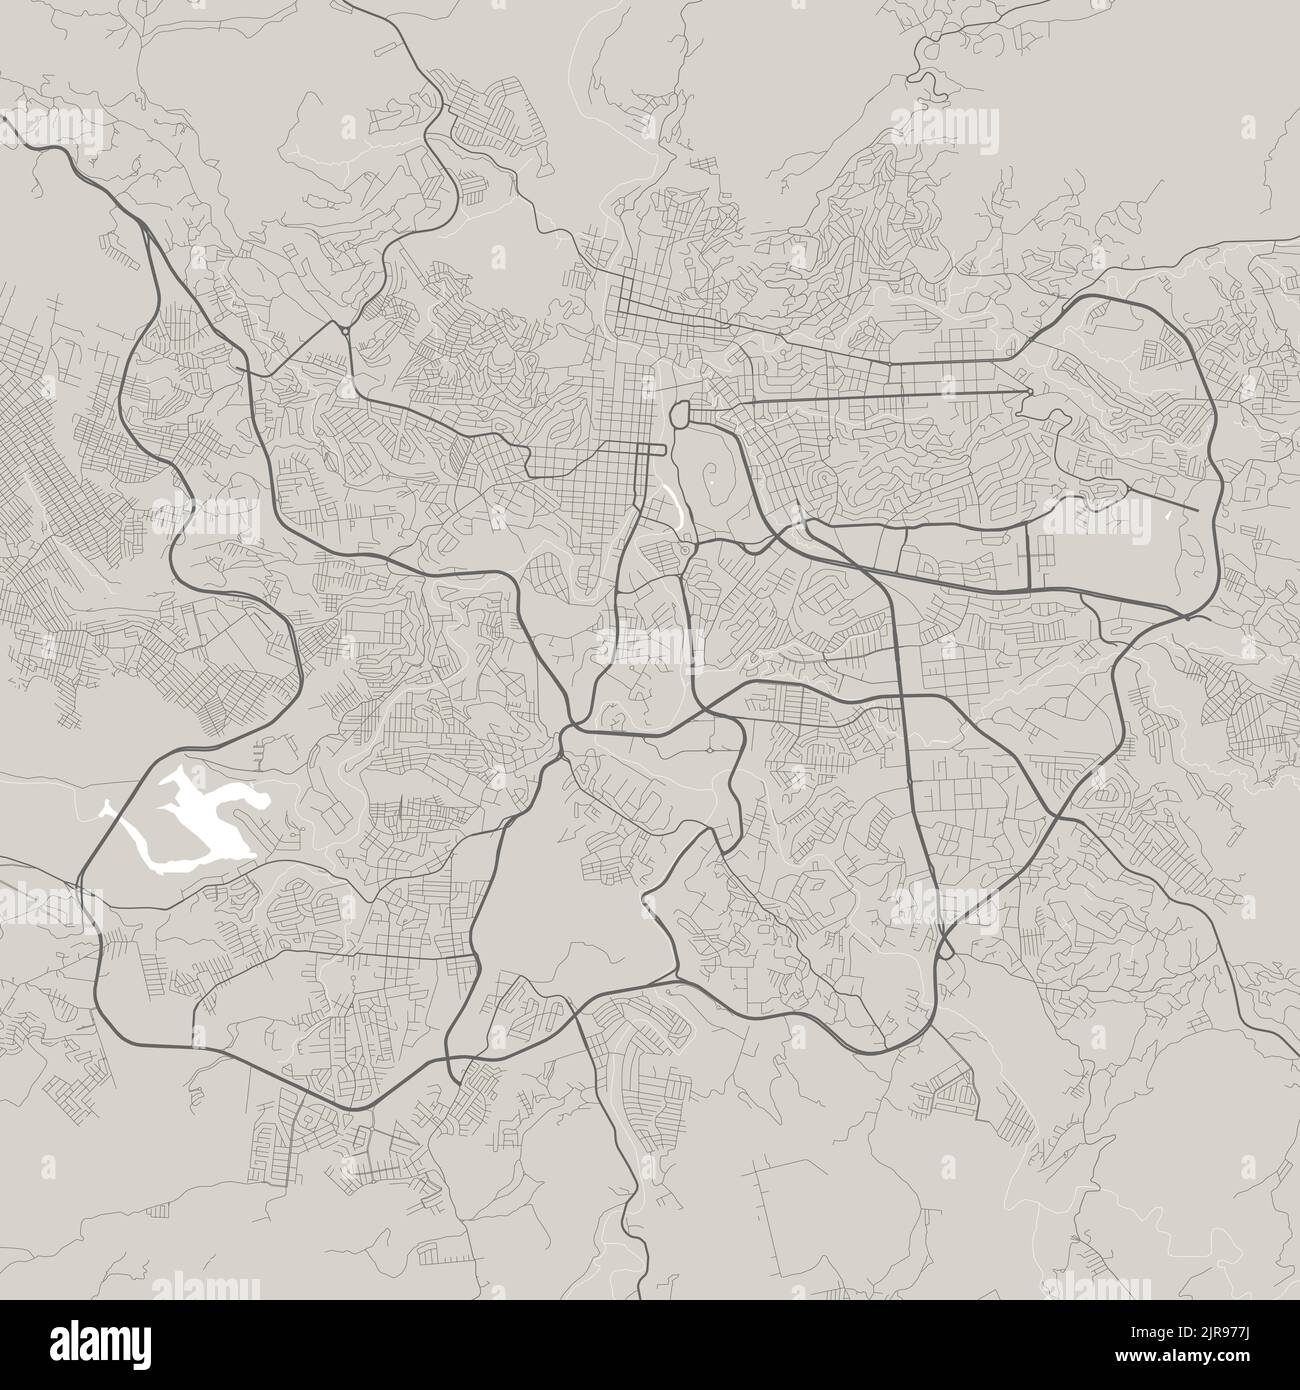 Vector map of Tegucigalpa, Honduras. Urban city in Honduras, America. road map poster illustration. Tegucigalpa map art. Stock Vector